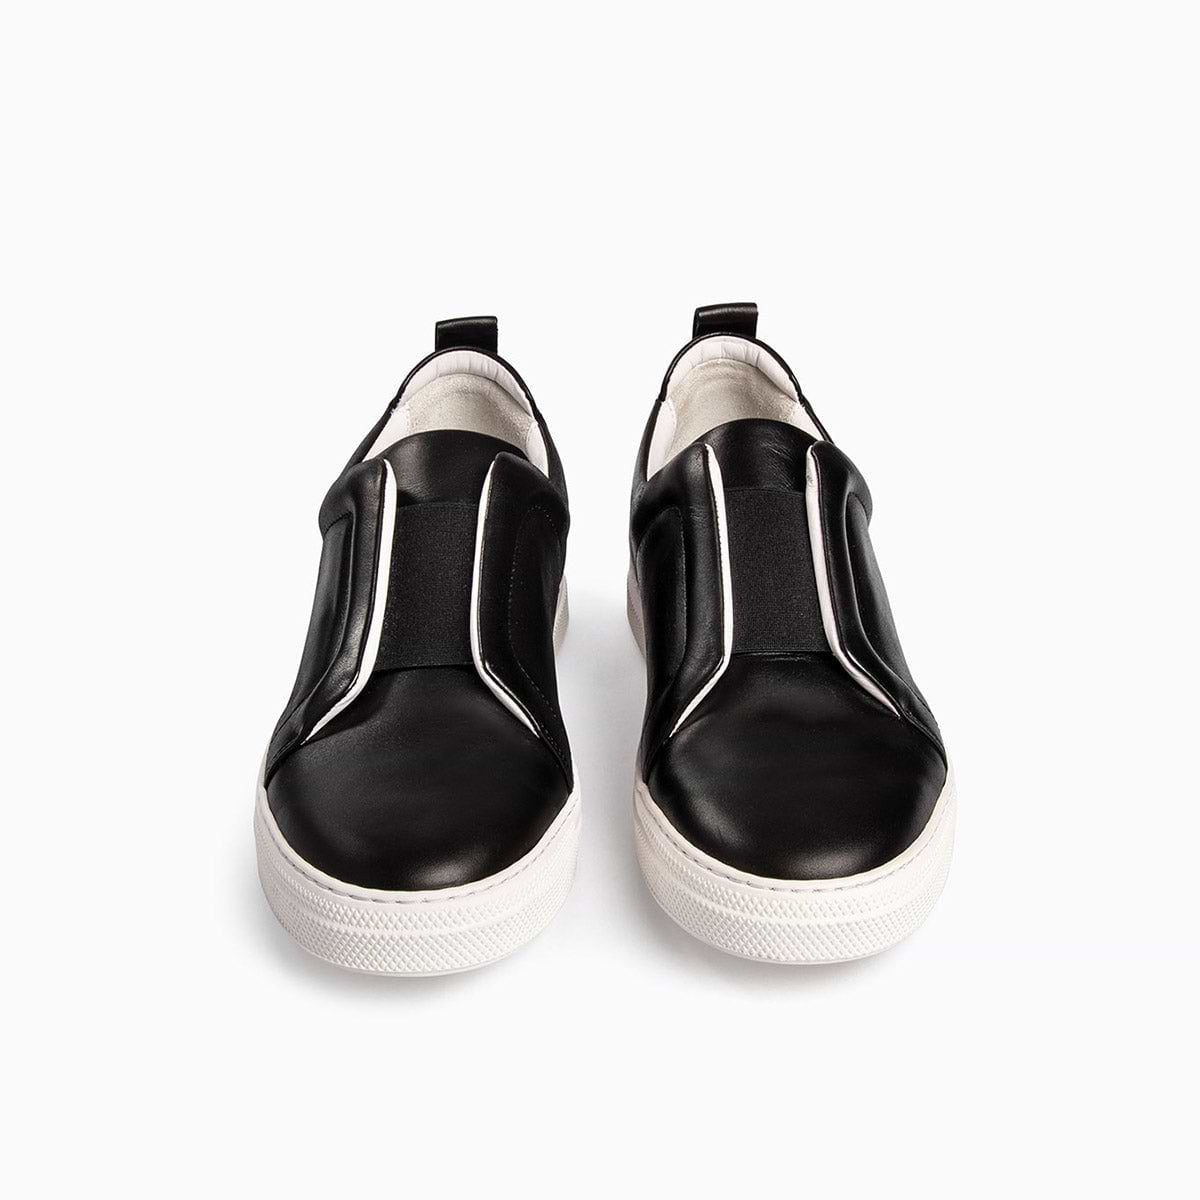 SLIDER sneakers for men in black leather — PIERRE HARDY